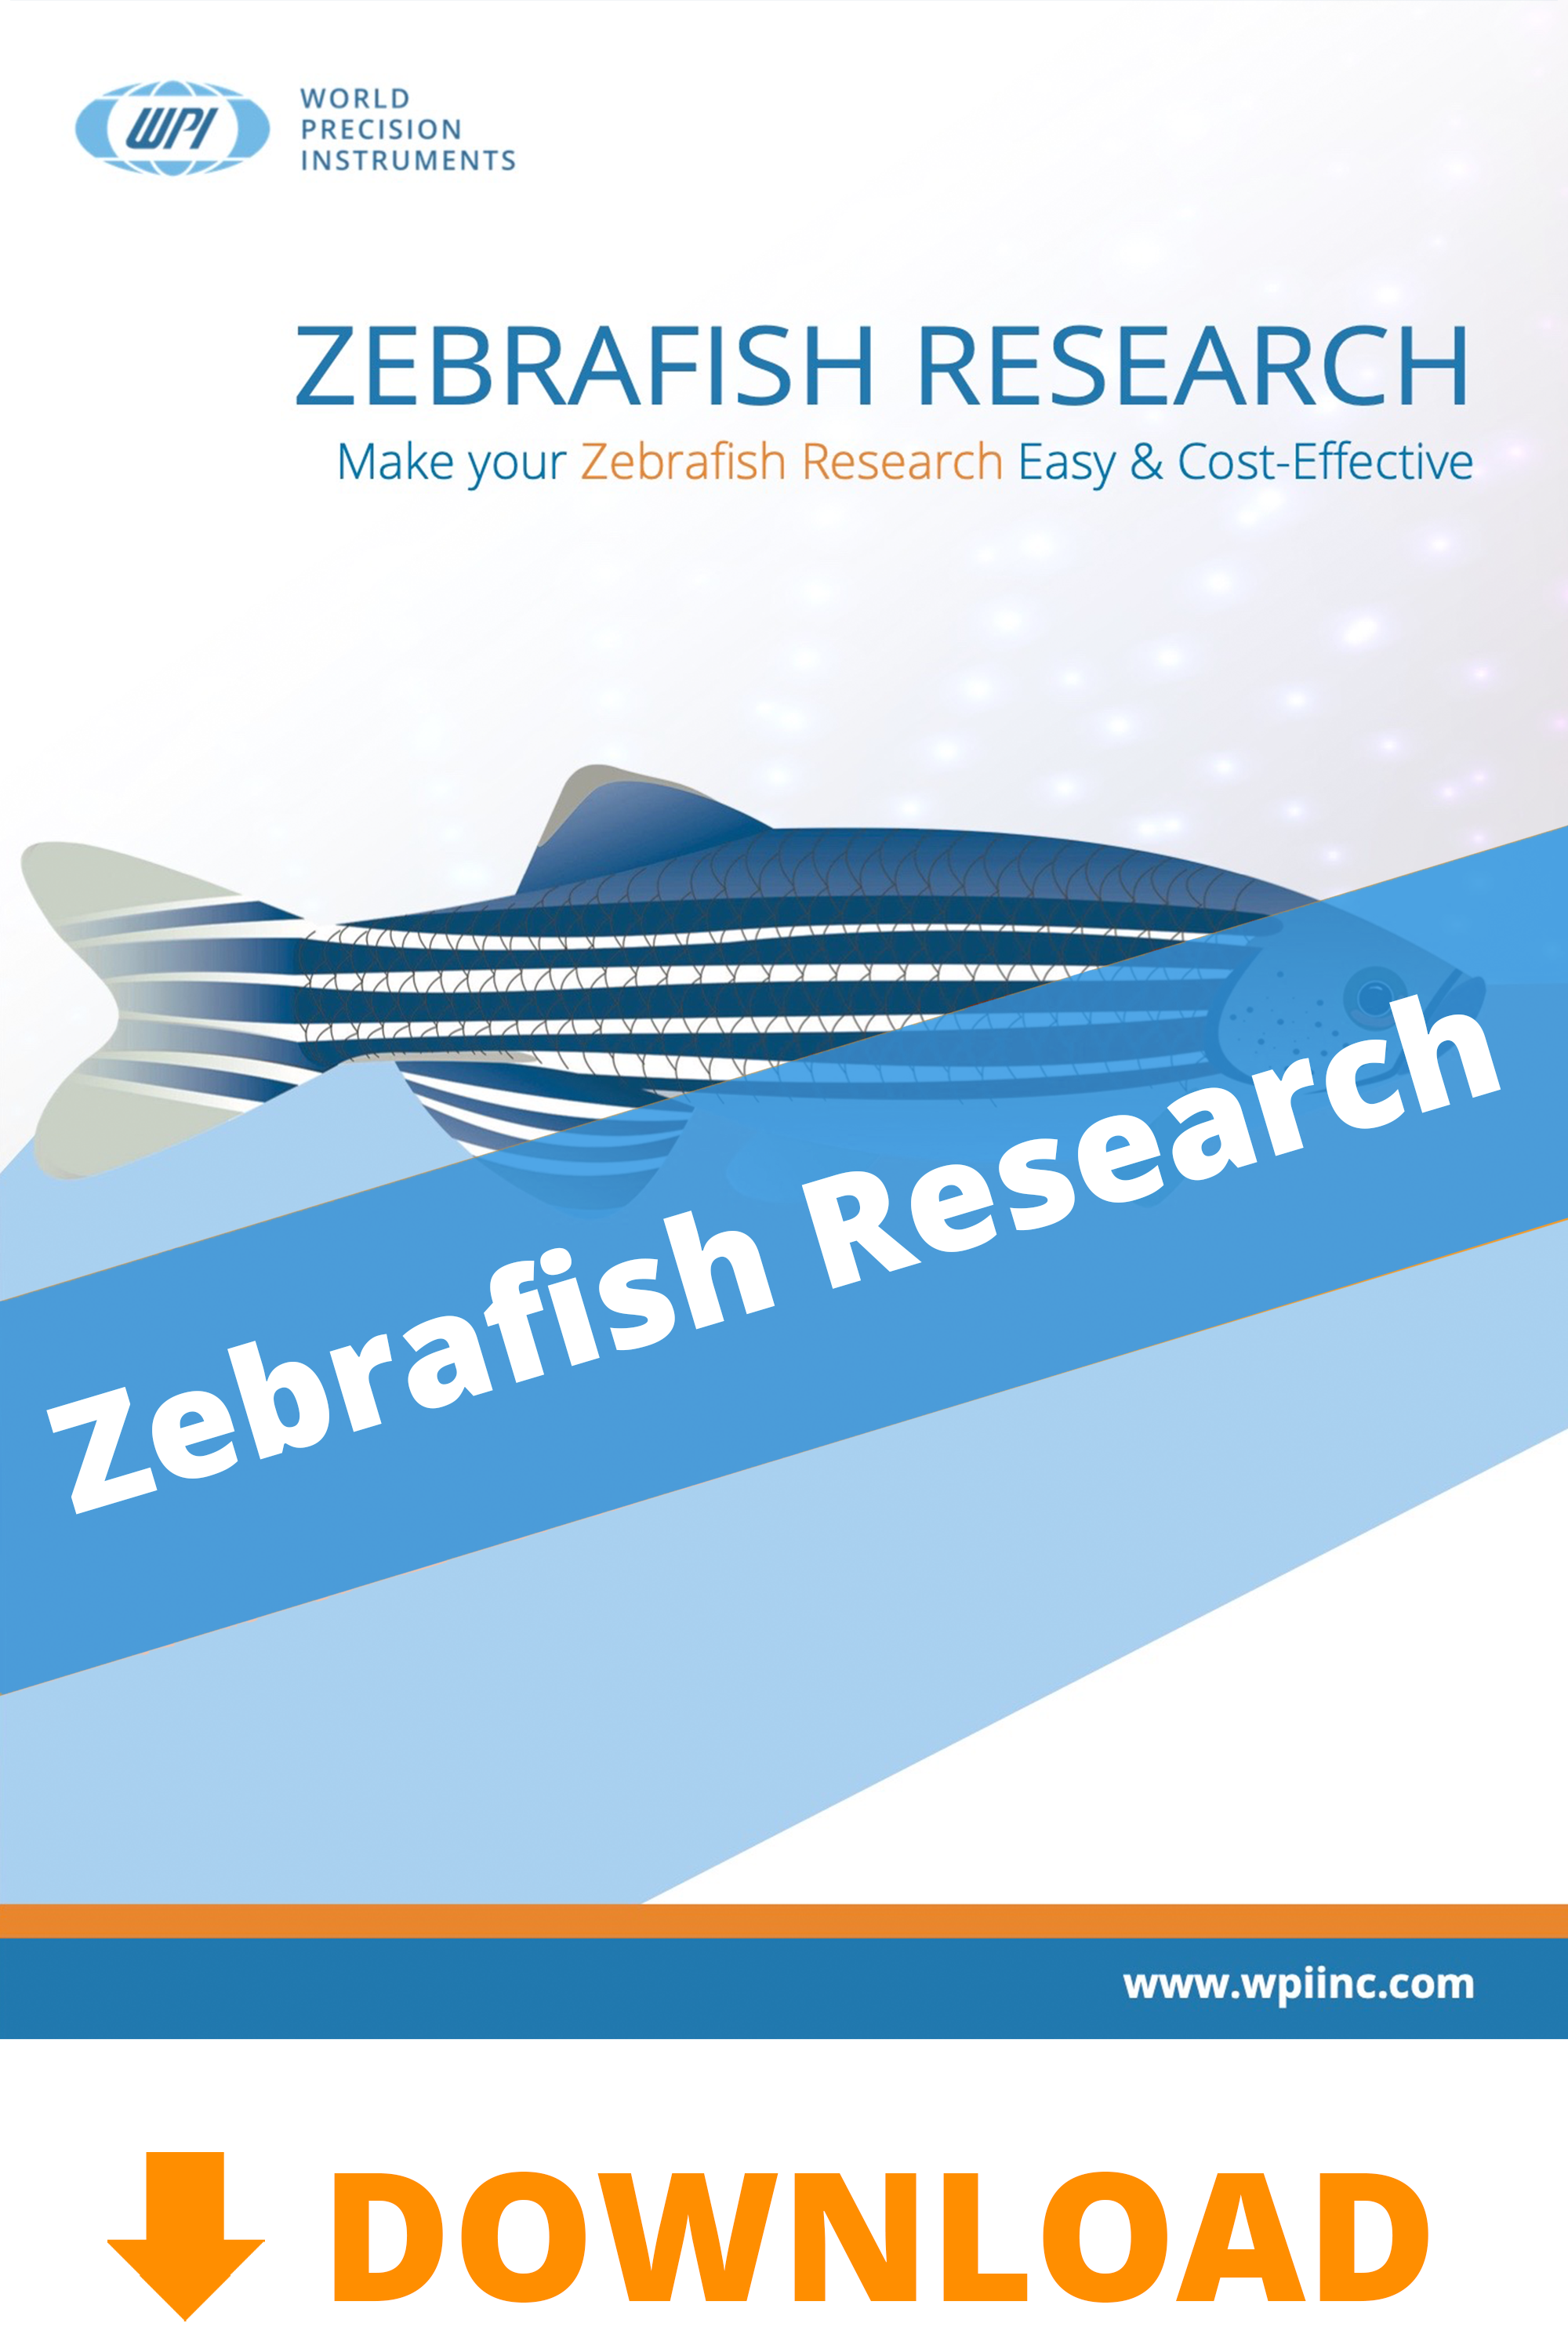 Download the Zebrafish Applications brochure